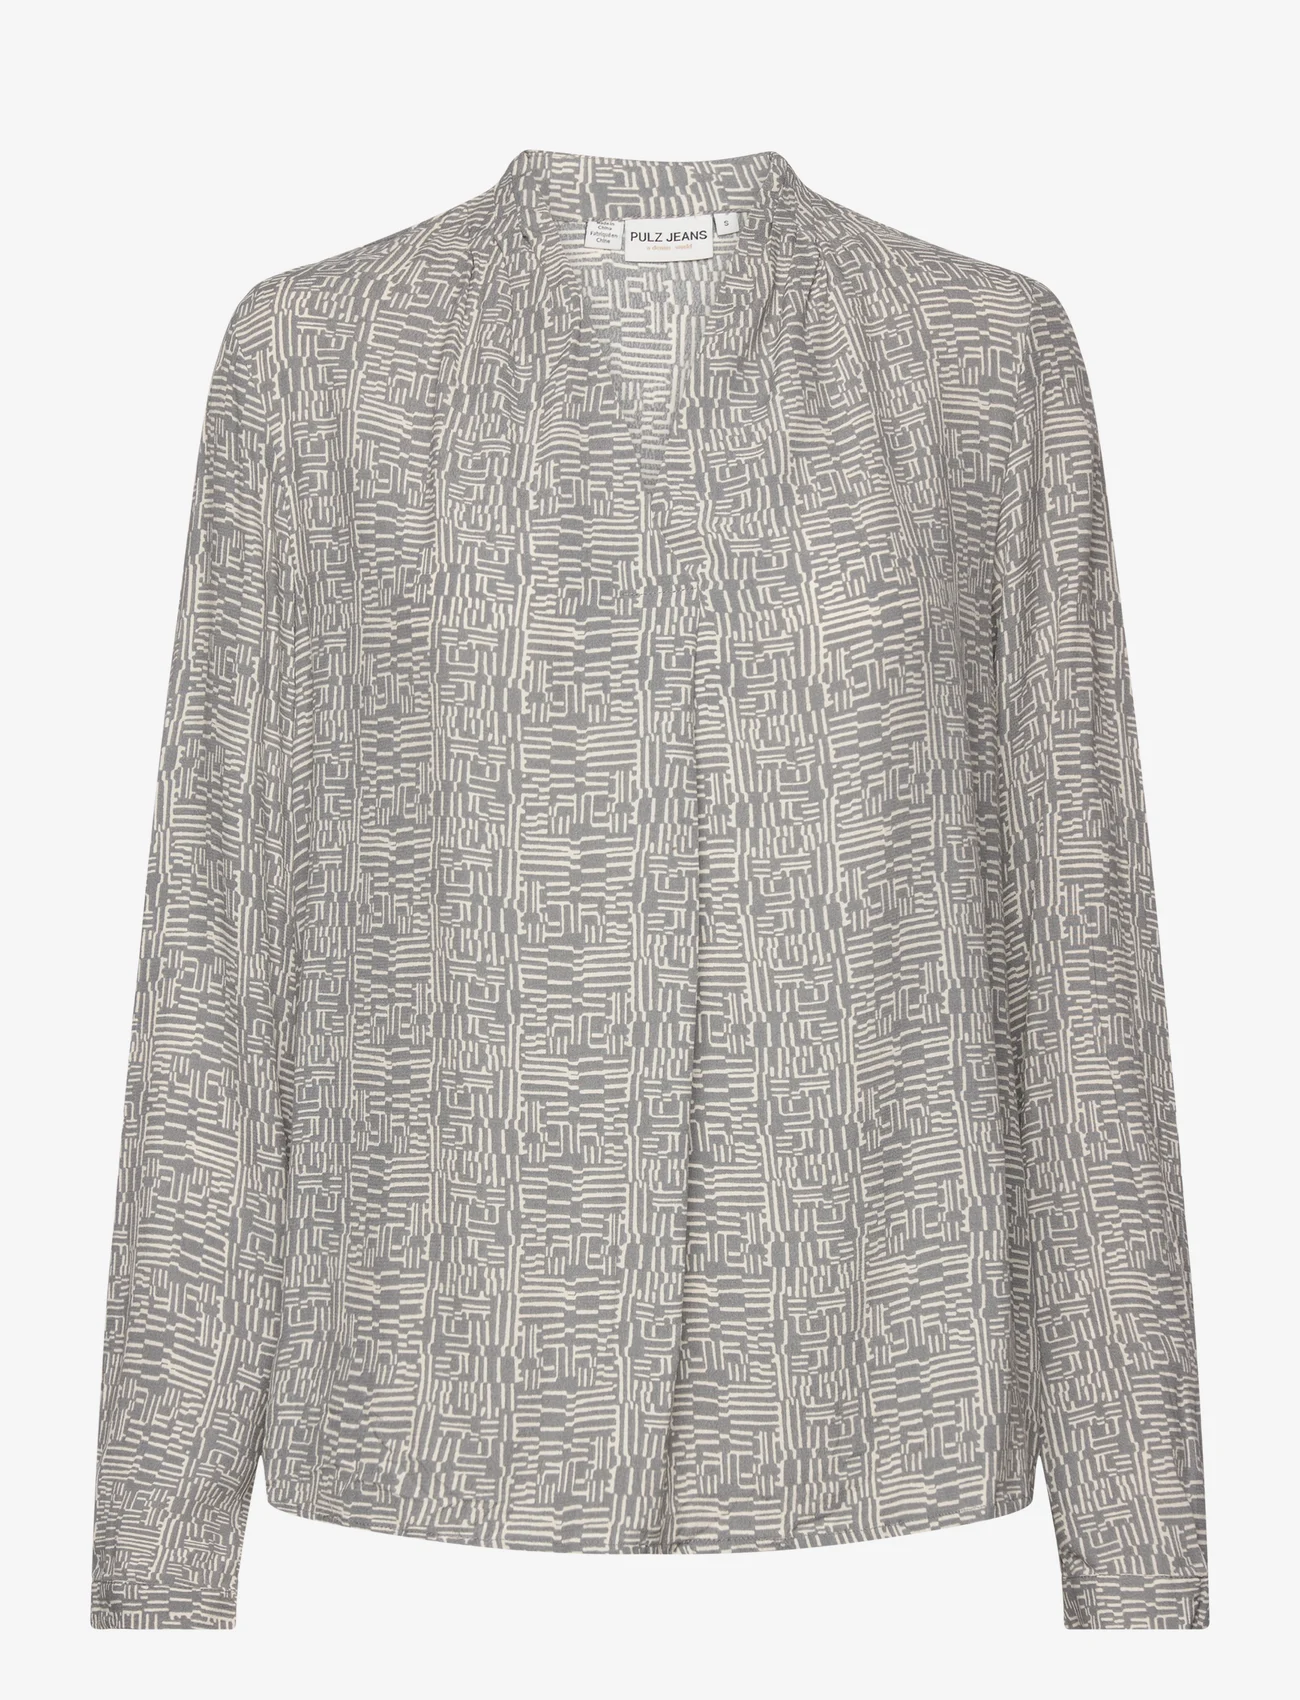 Pulz Jeans - PZGENE LS Blouse - blouses met lange mouwen - frost gray printed - 0